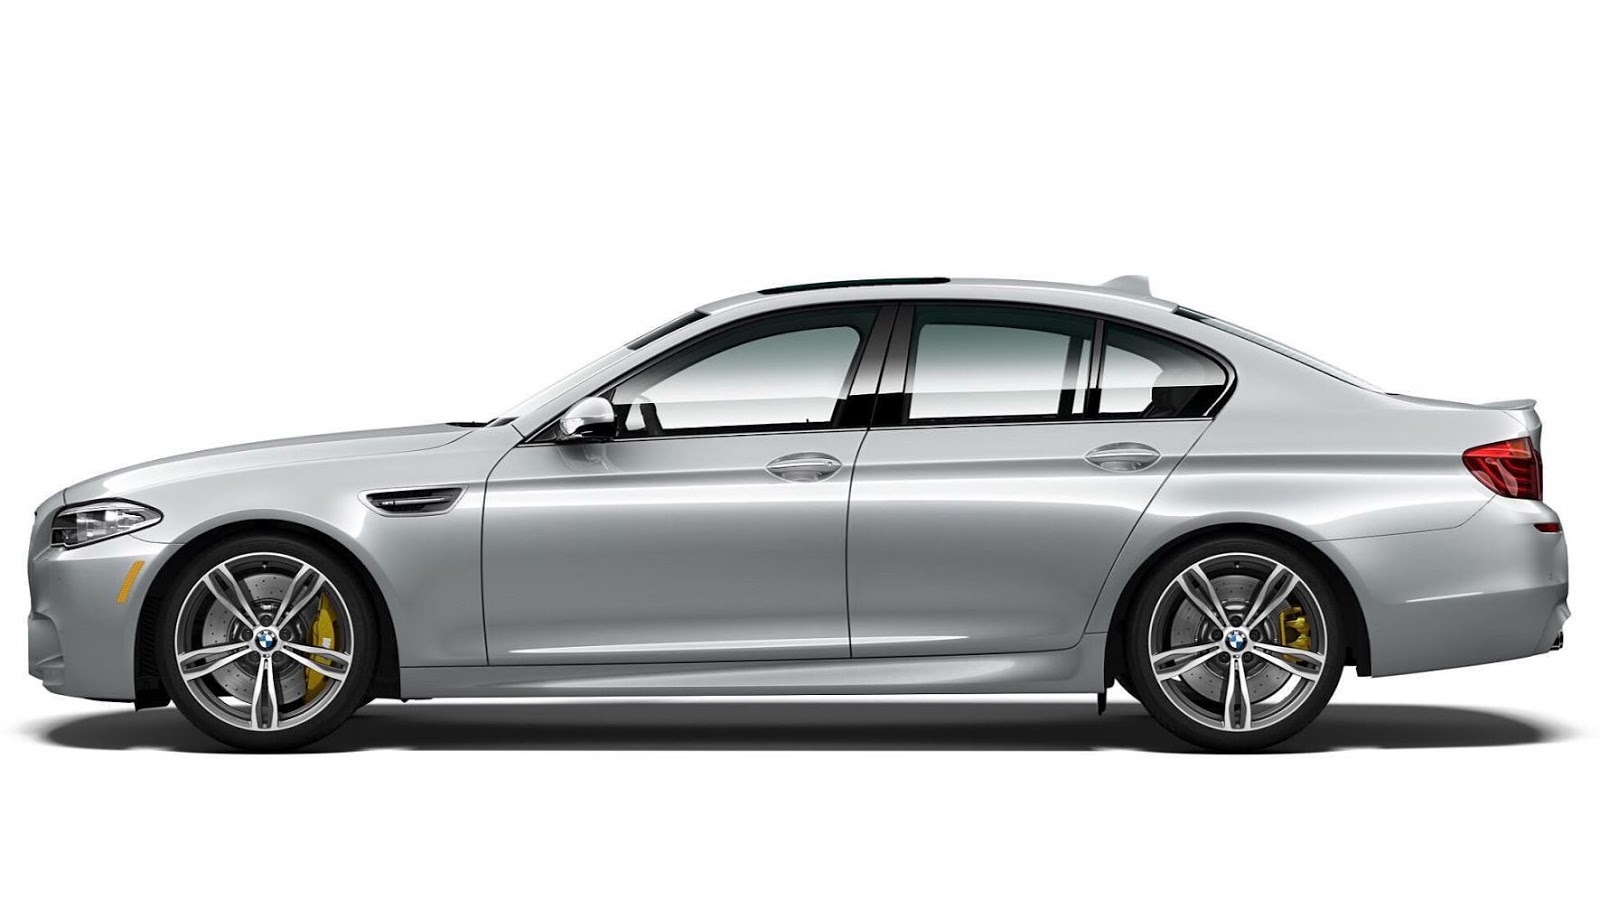 Ra mắt BMW M5 Pure Metal Silver bản giới hạn - 4